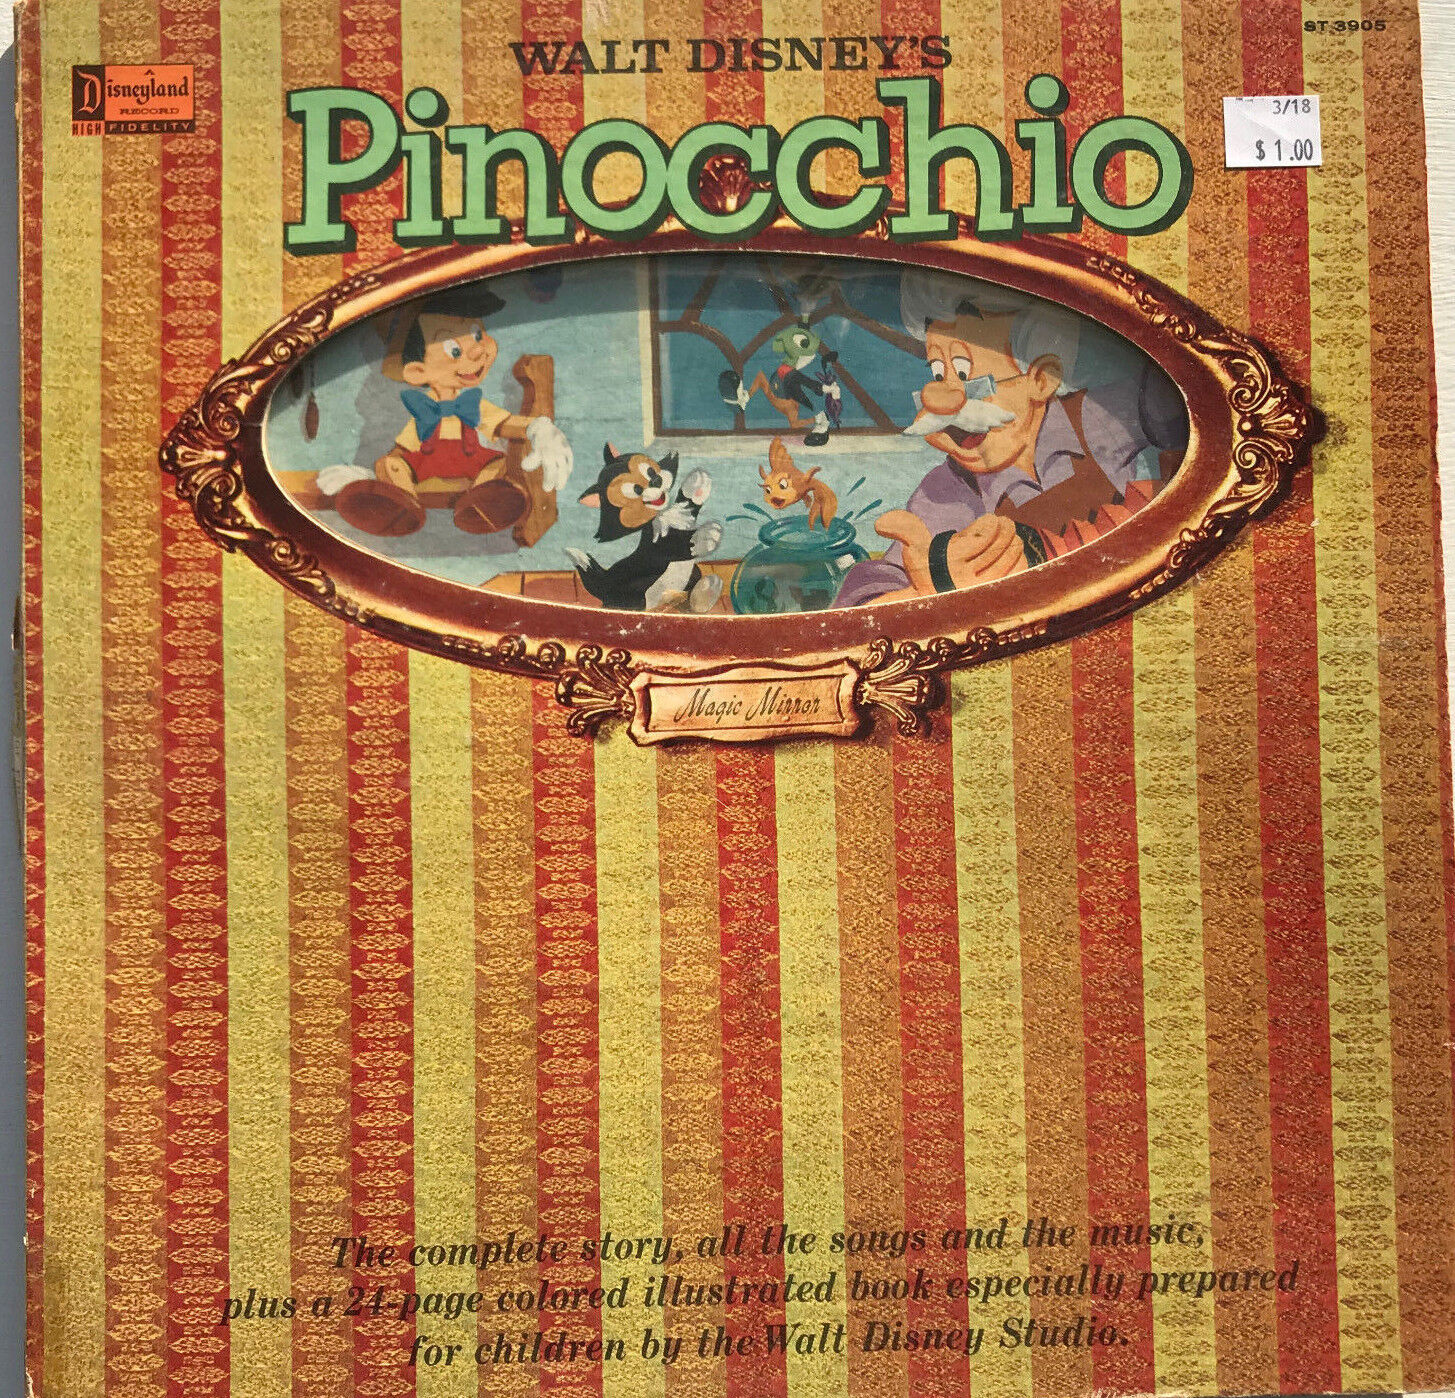 Walt Disney Pinocchio LP Vinyl Record  Original Pressing 1966